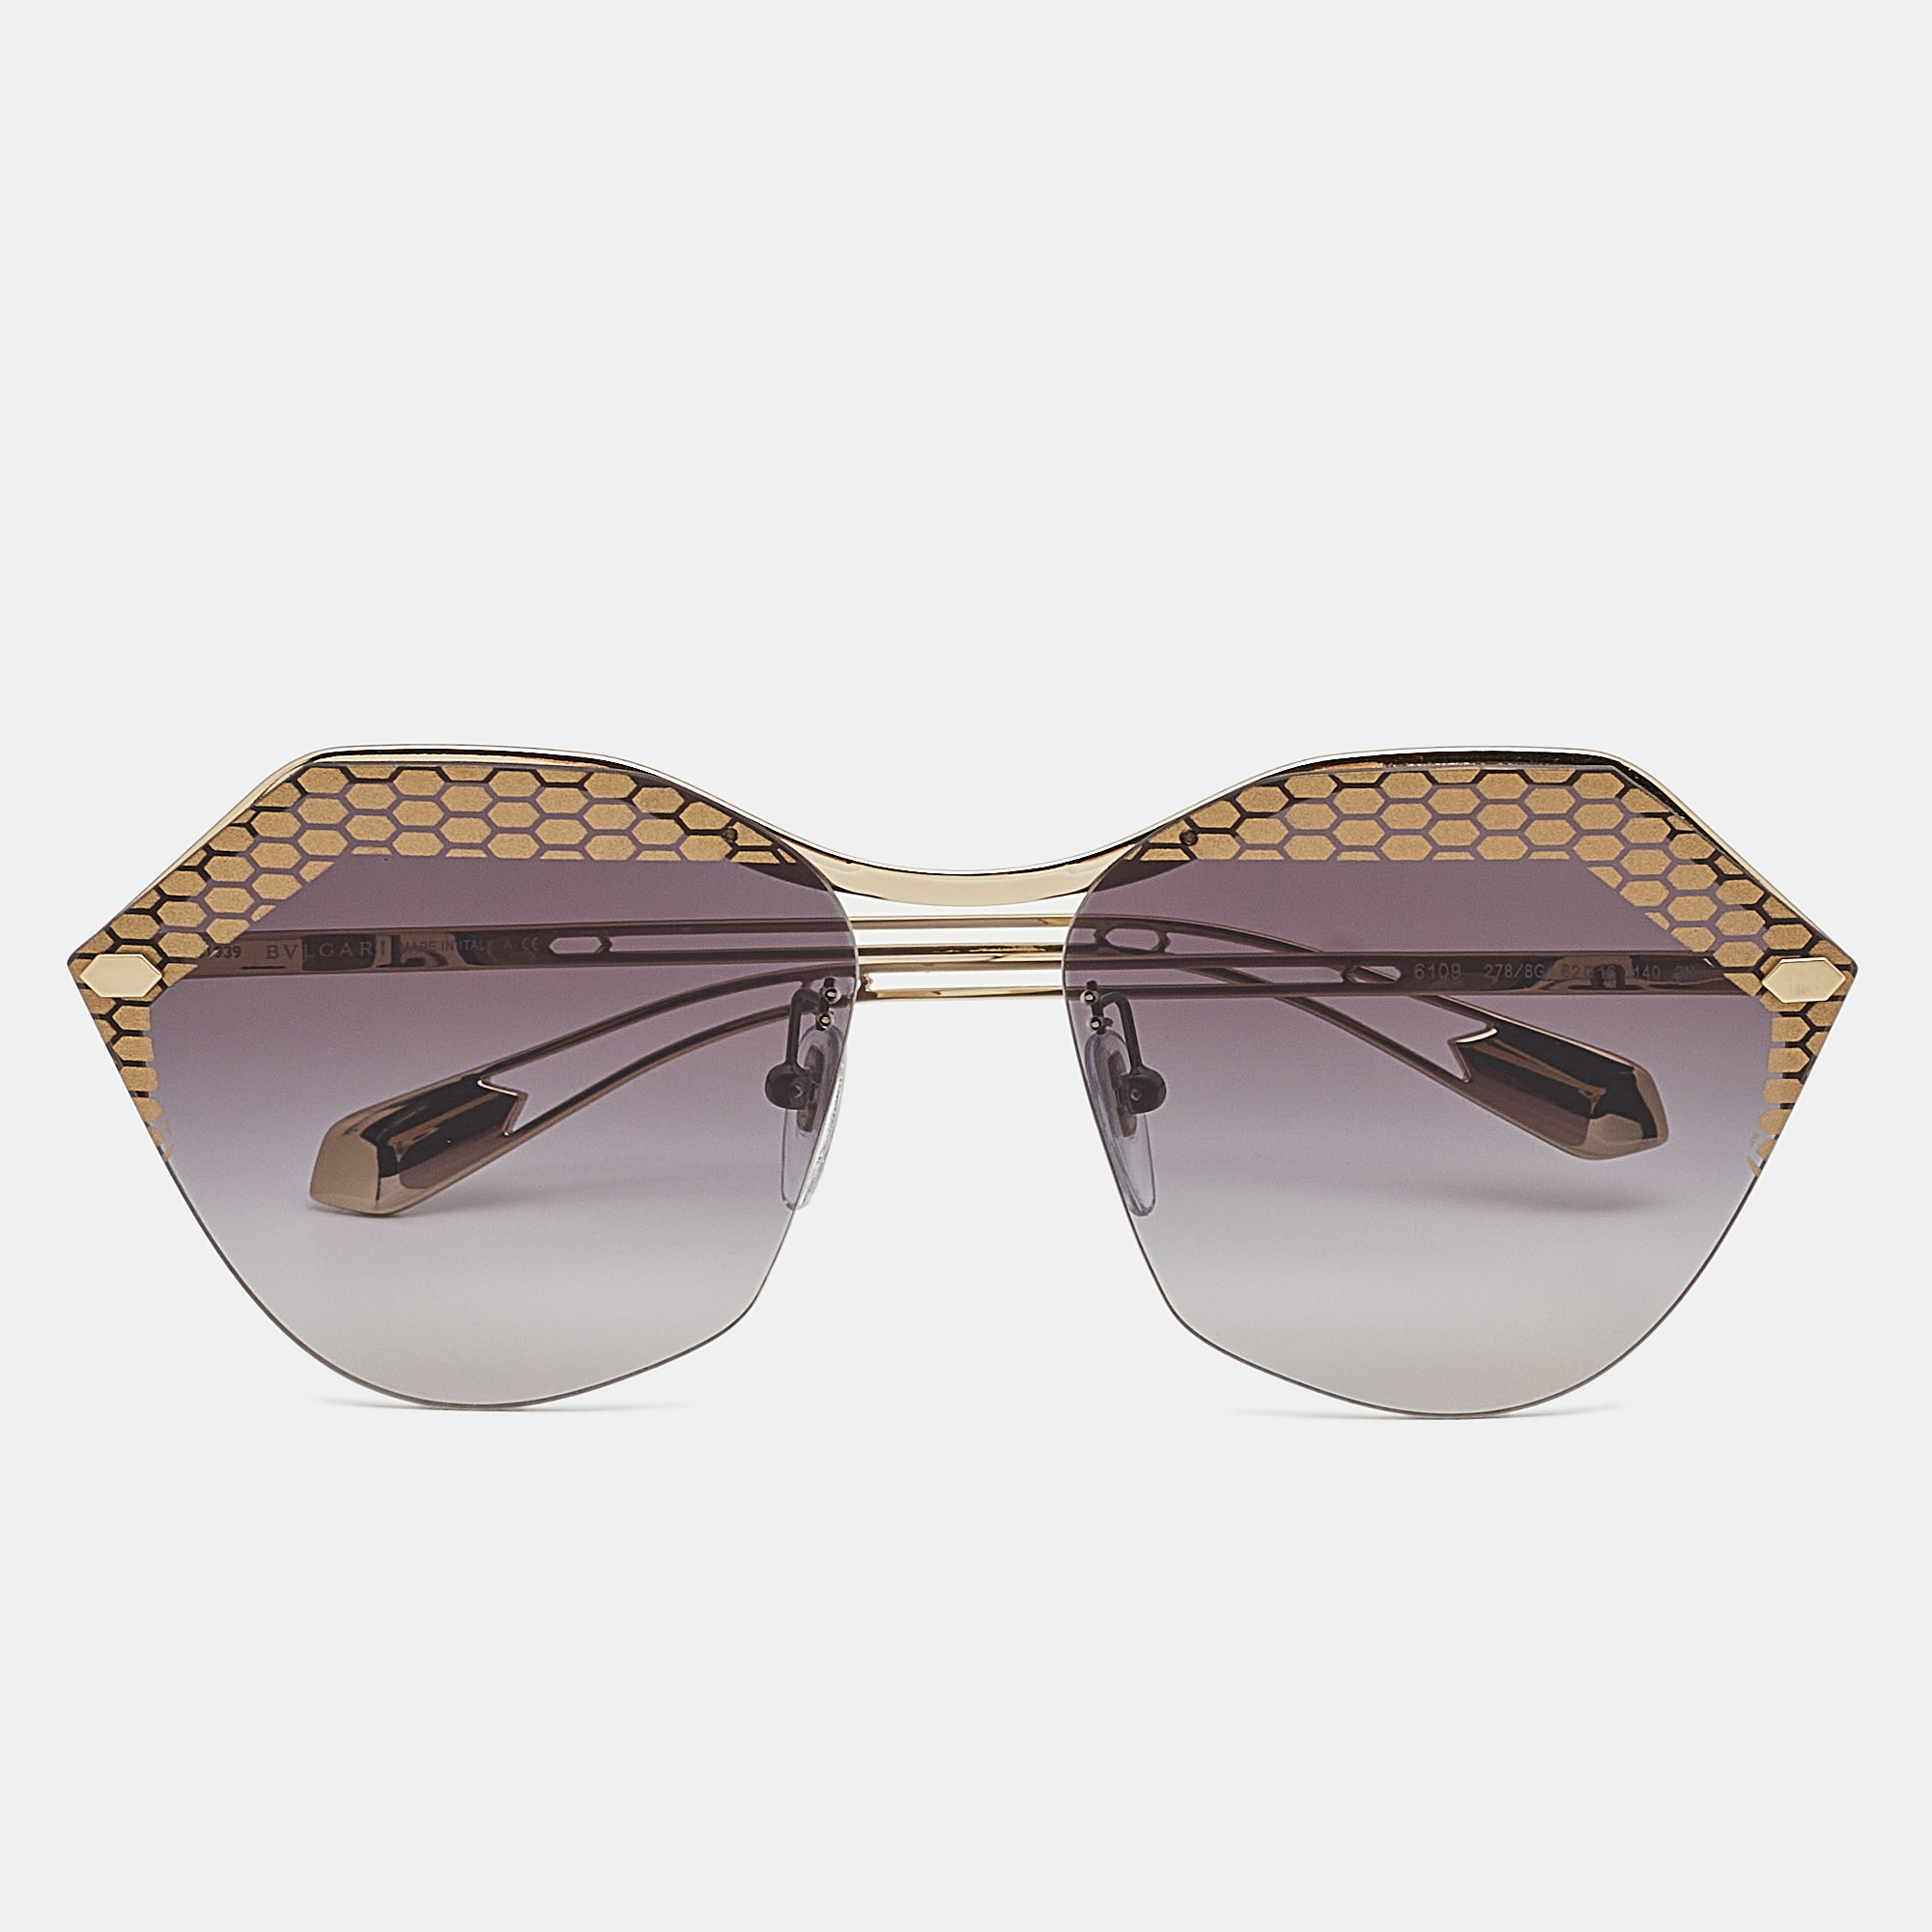 

Bvlgari Gold/Black Gradient BV 6109 Rimless Sunglasses